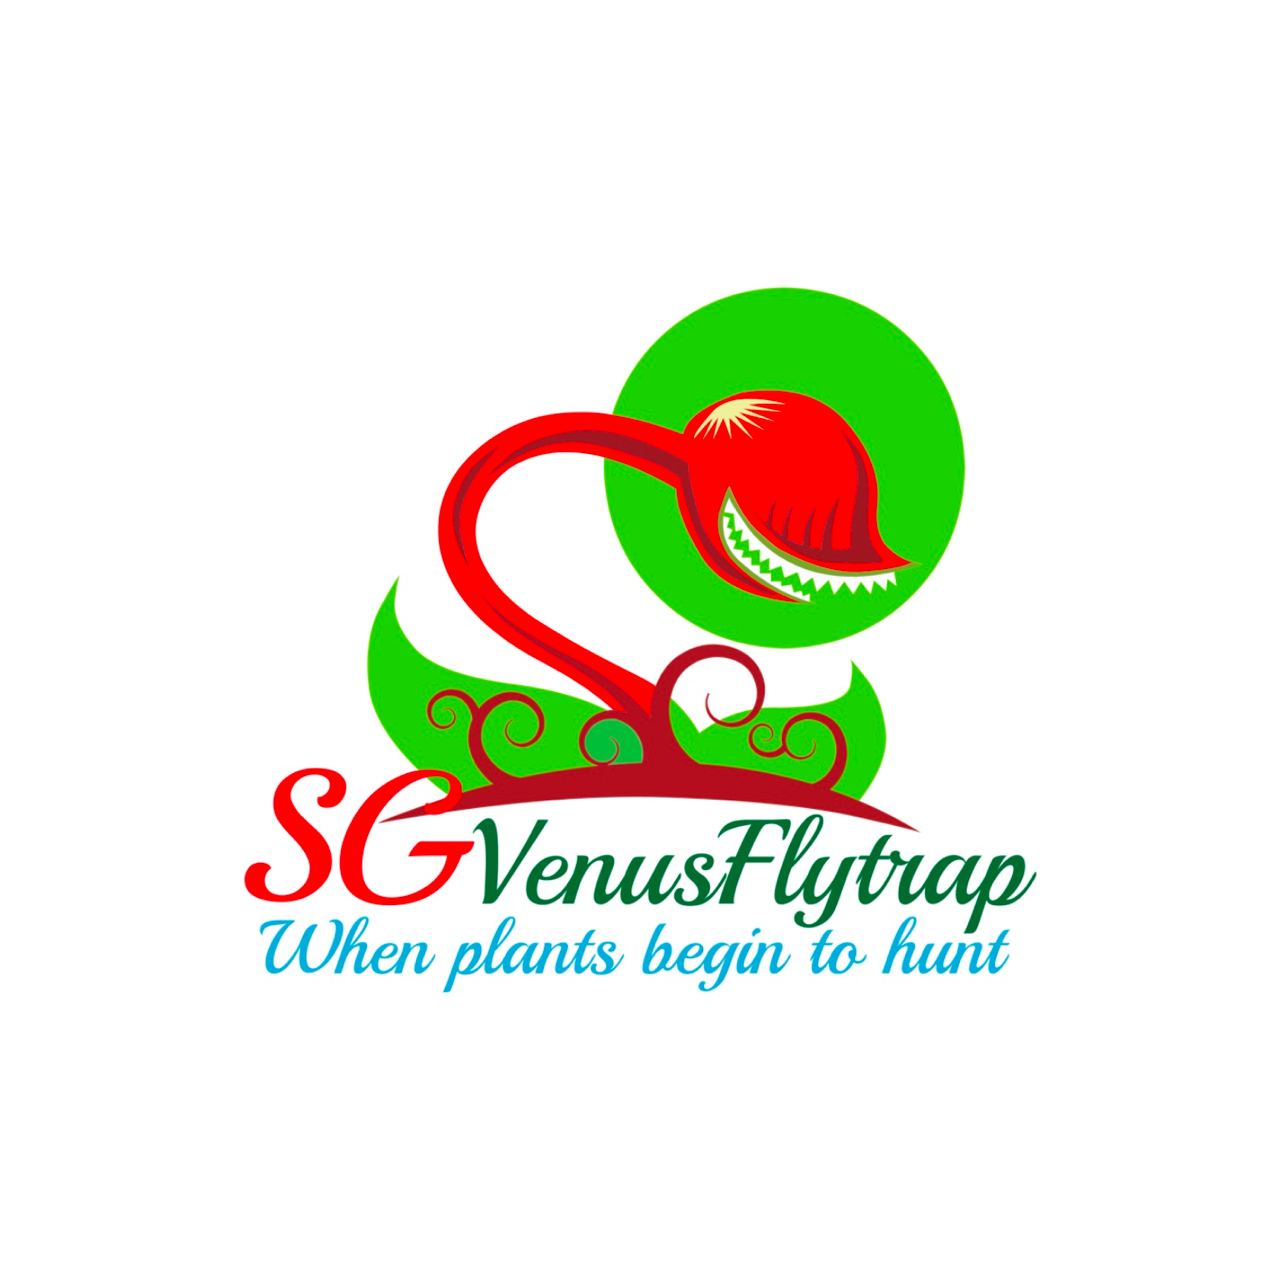 Sgvenusflytrap Pte. Ltd. logo